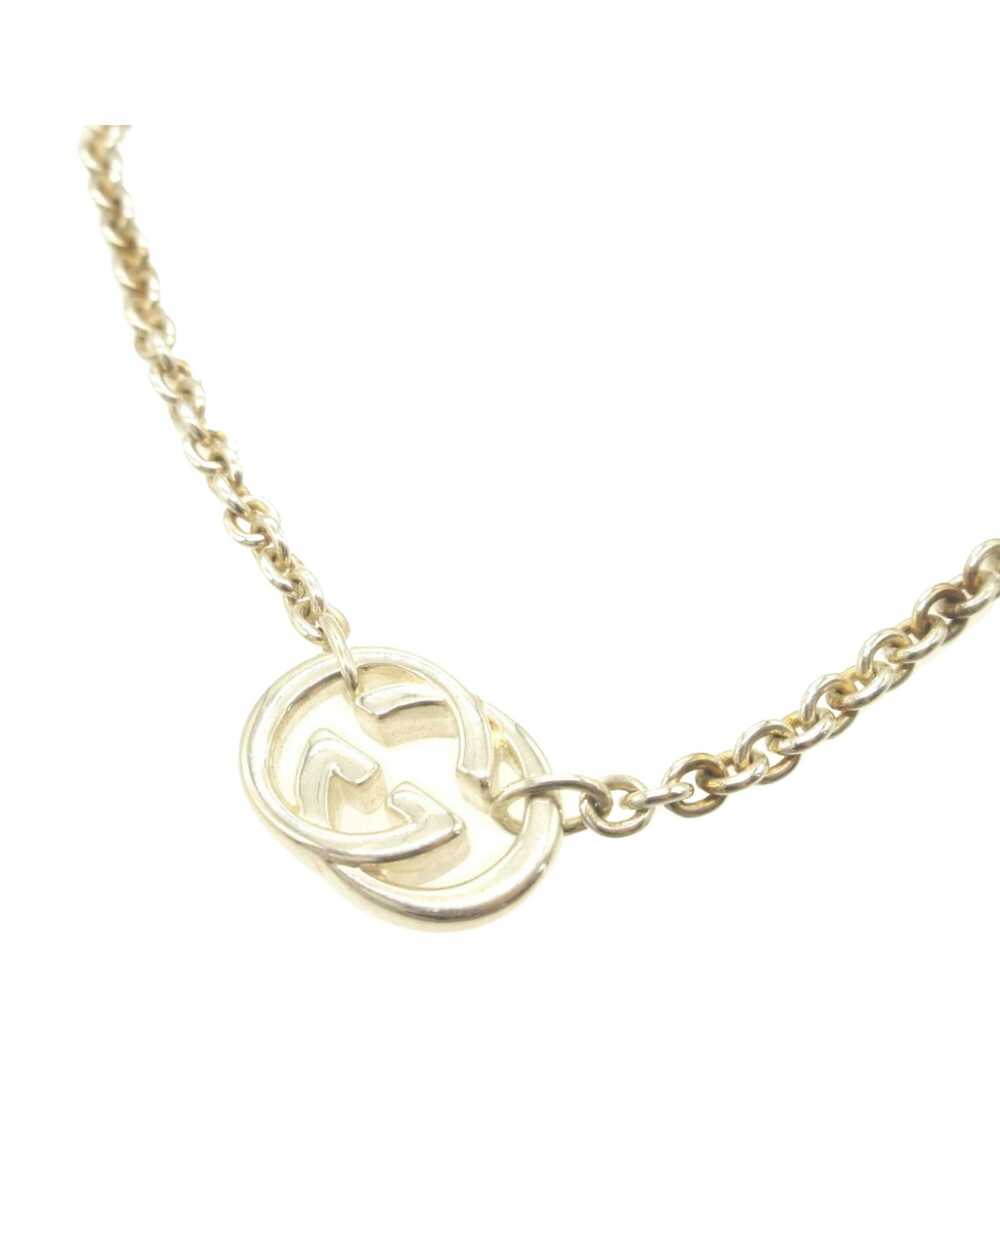 Gucci Interlocking Silver Pendant Necklace - image 2